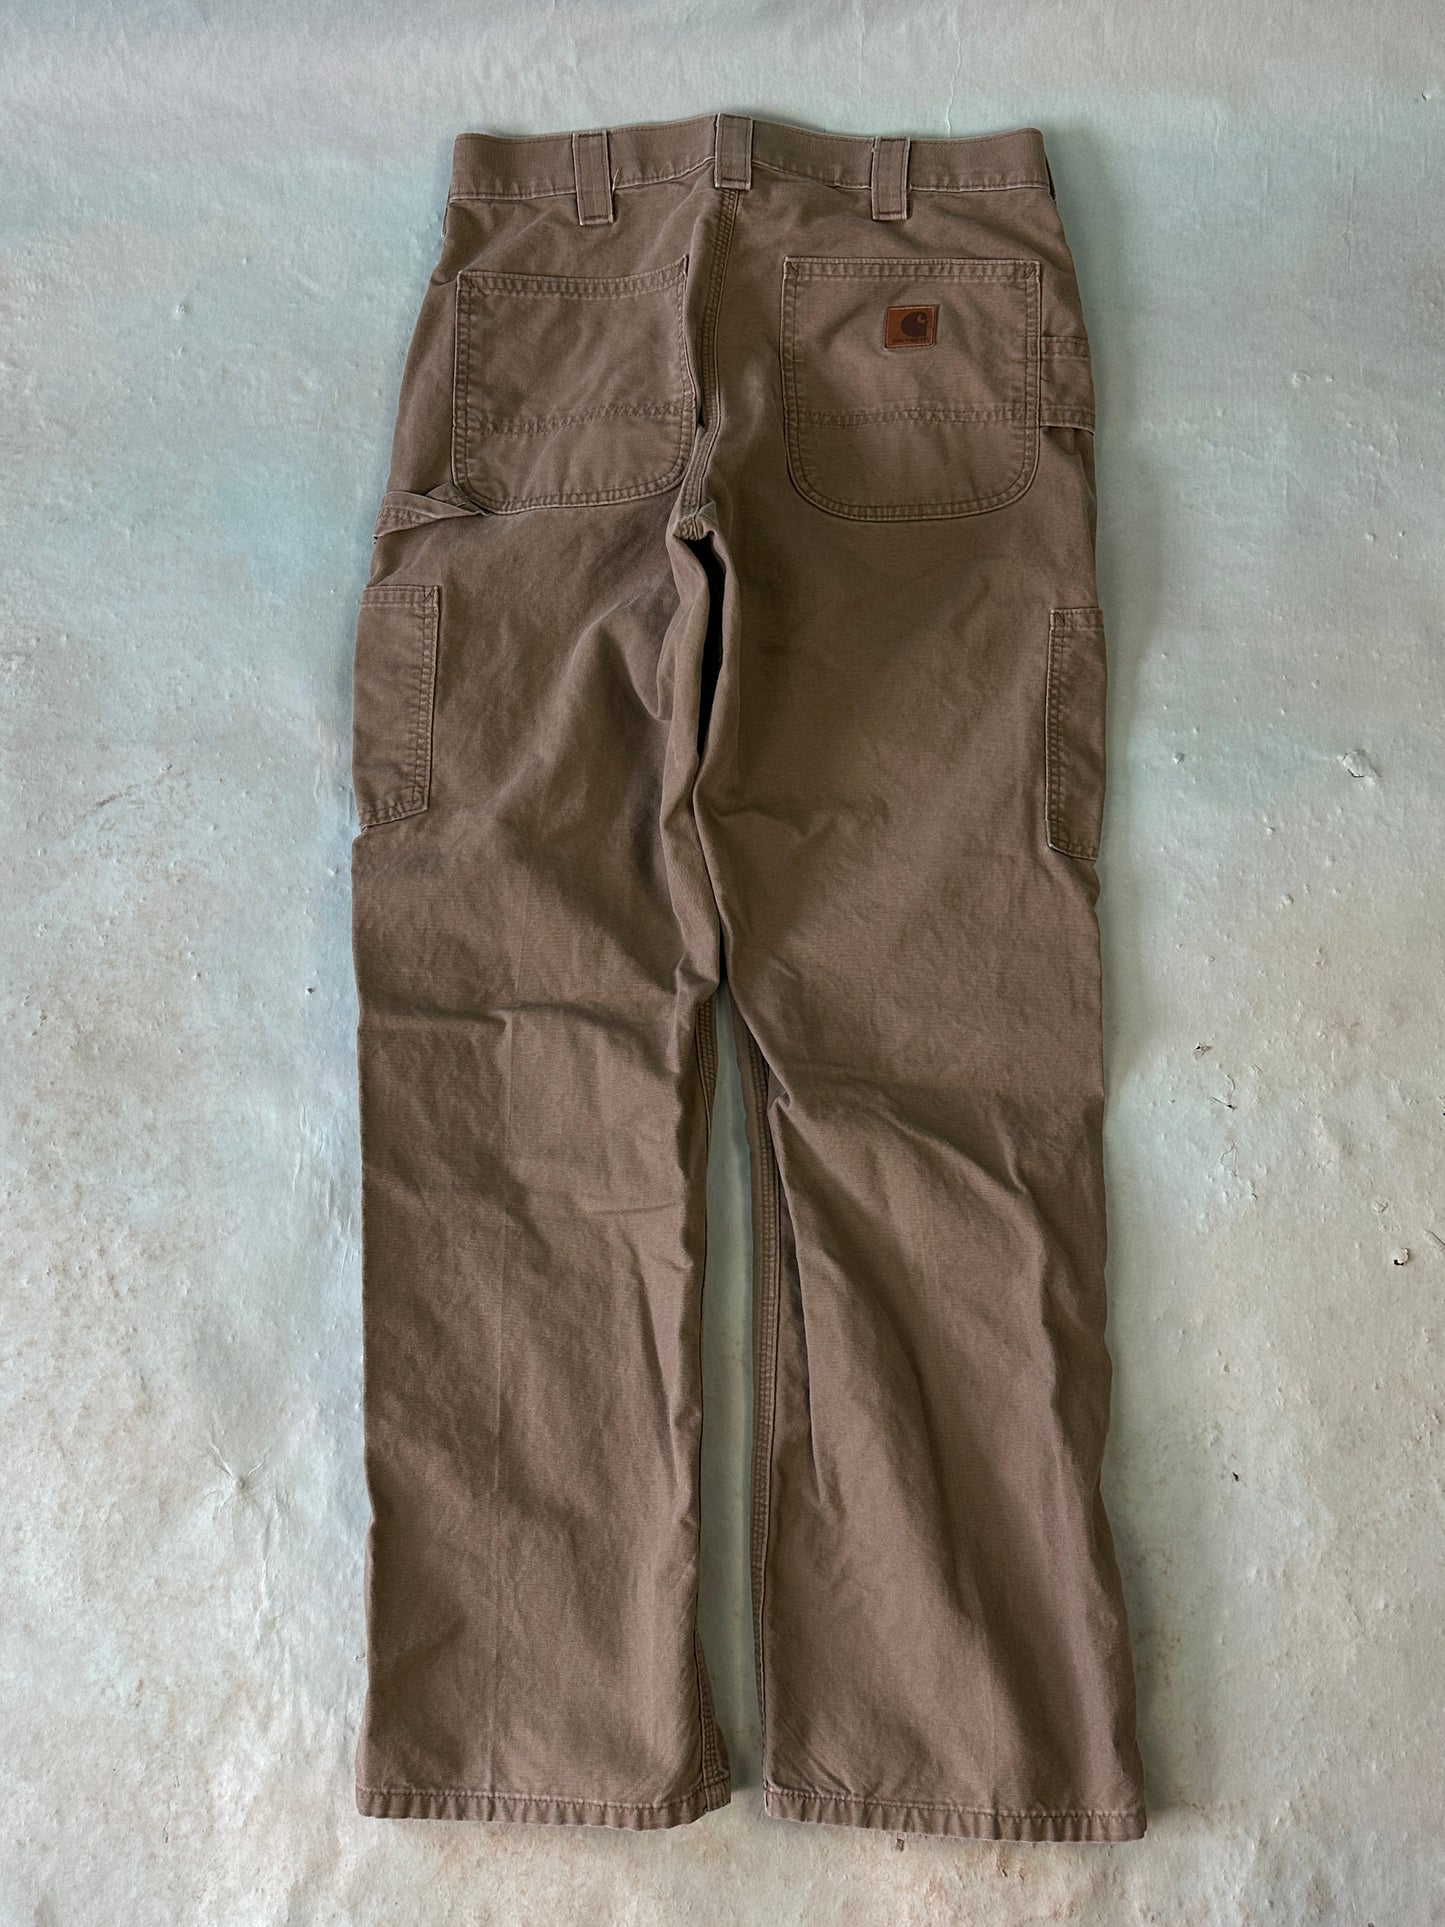 Carhartt Carpenter Vintage Pants - 32 x 32